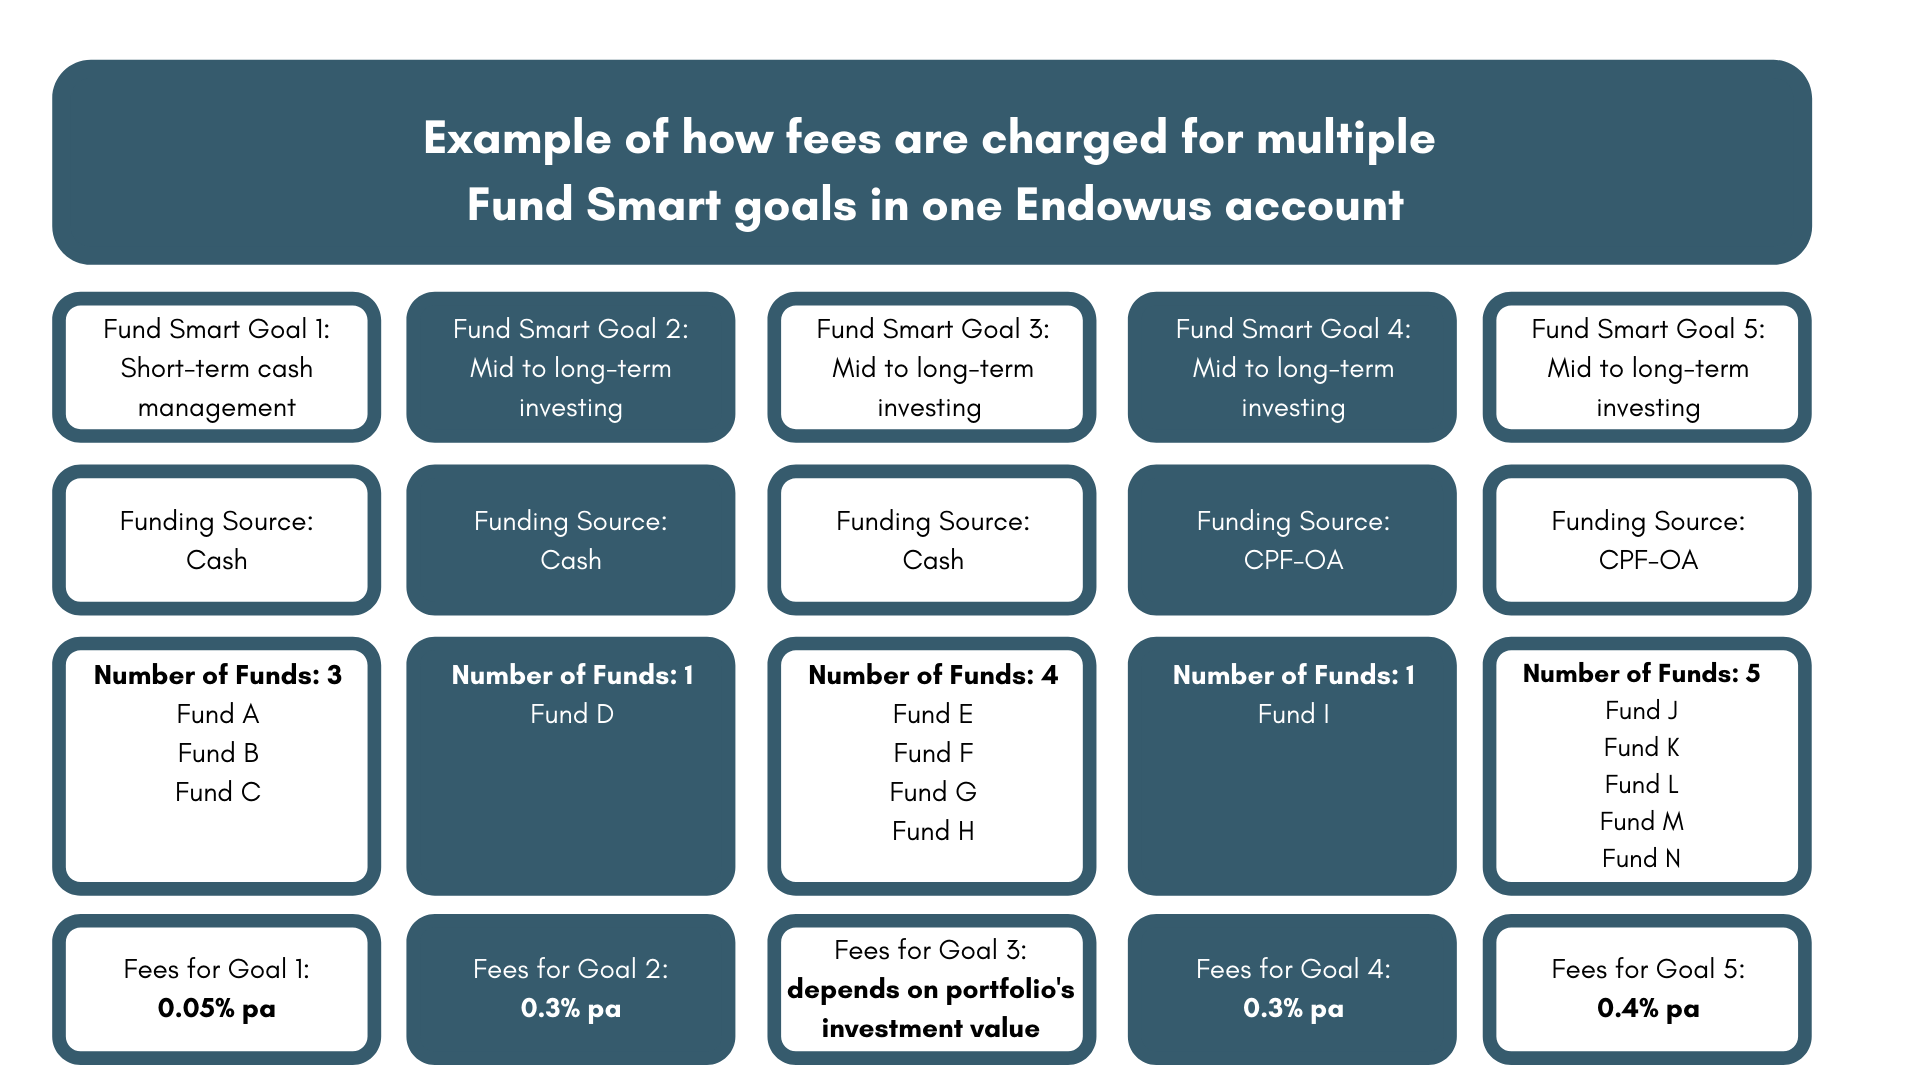 Endowus_Fund_Smart_Fees.png